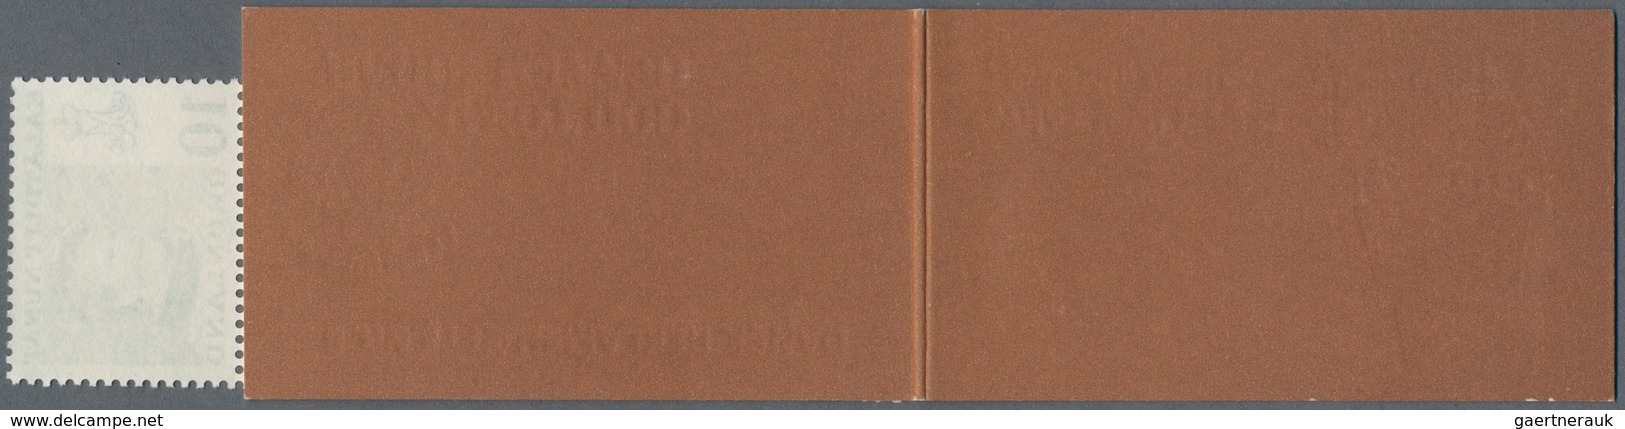 Dänemark - Grönland: 1977, Tobaco, Privat Advertising Booklet DAKA Nr. 3 (DR Nr. 5) Mint Never Hinge - Briefe U. Dokumente